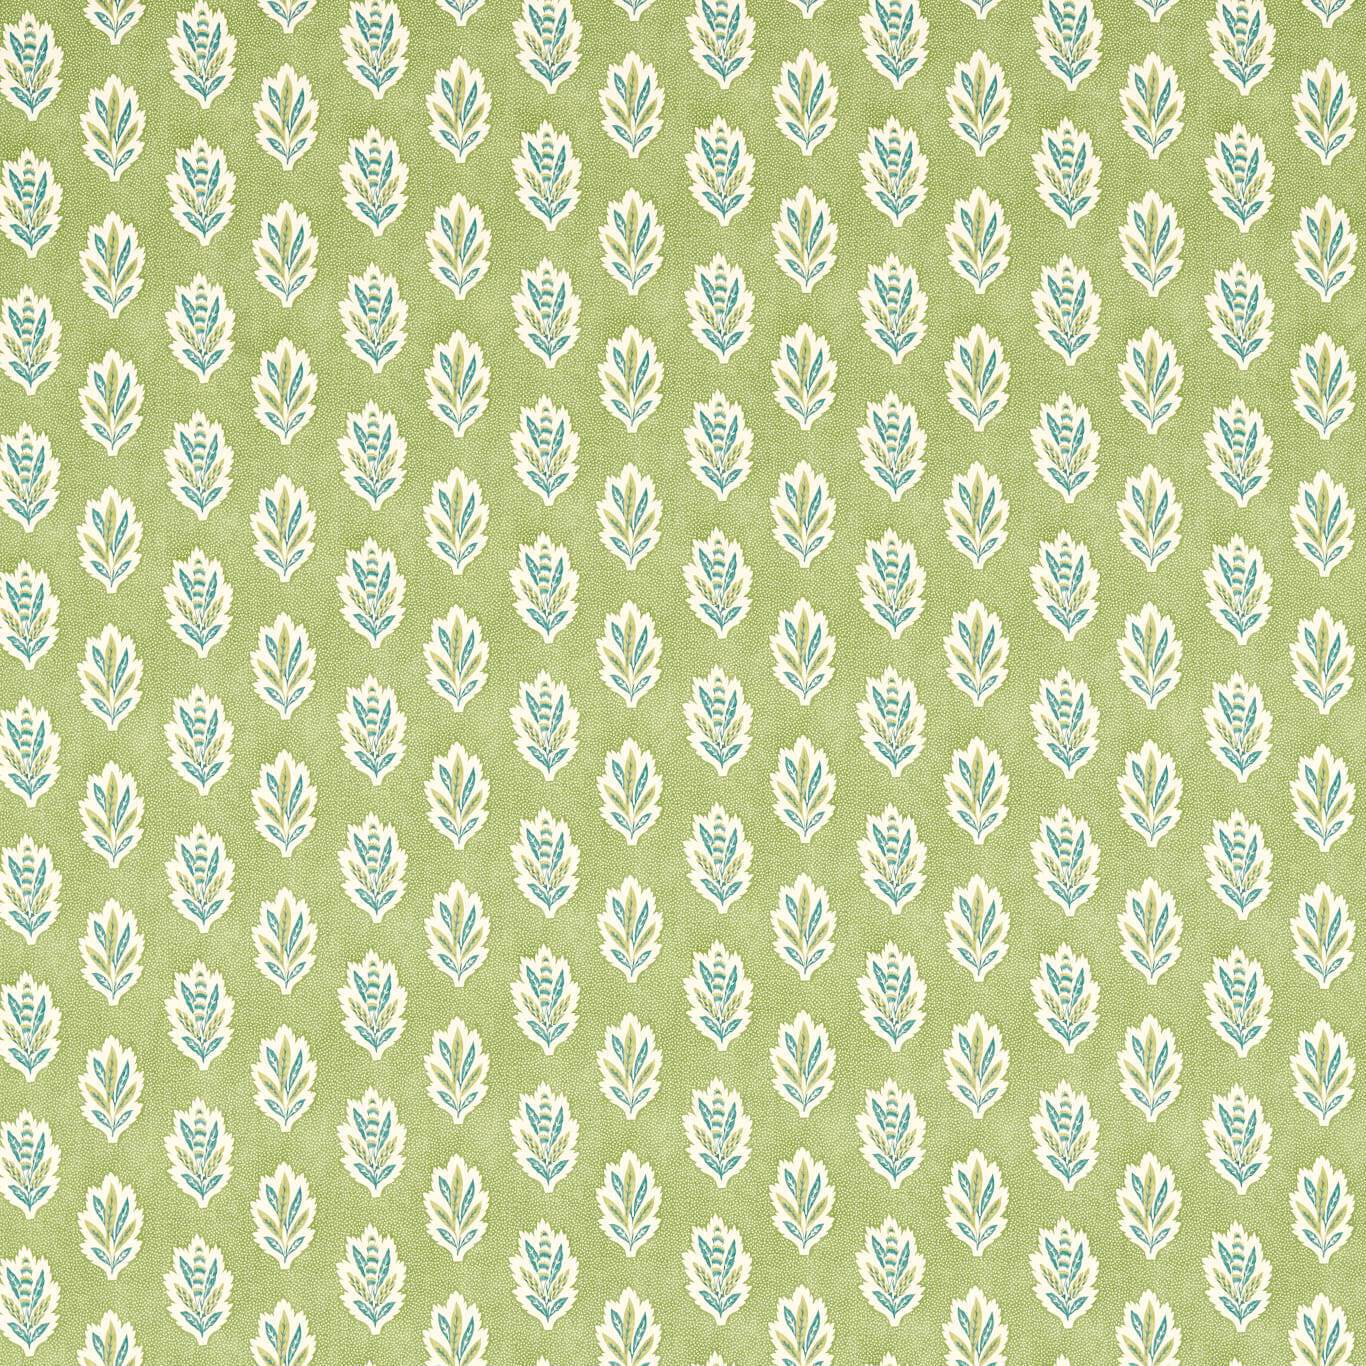 Sessile Leaf Artichoke Fabric by SAN